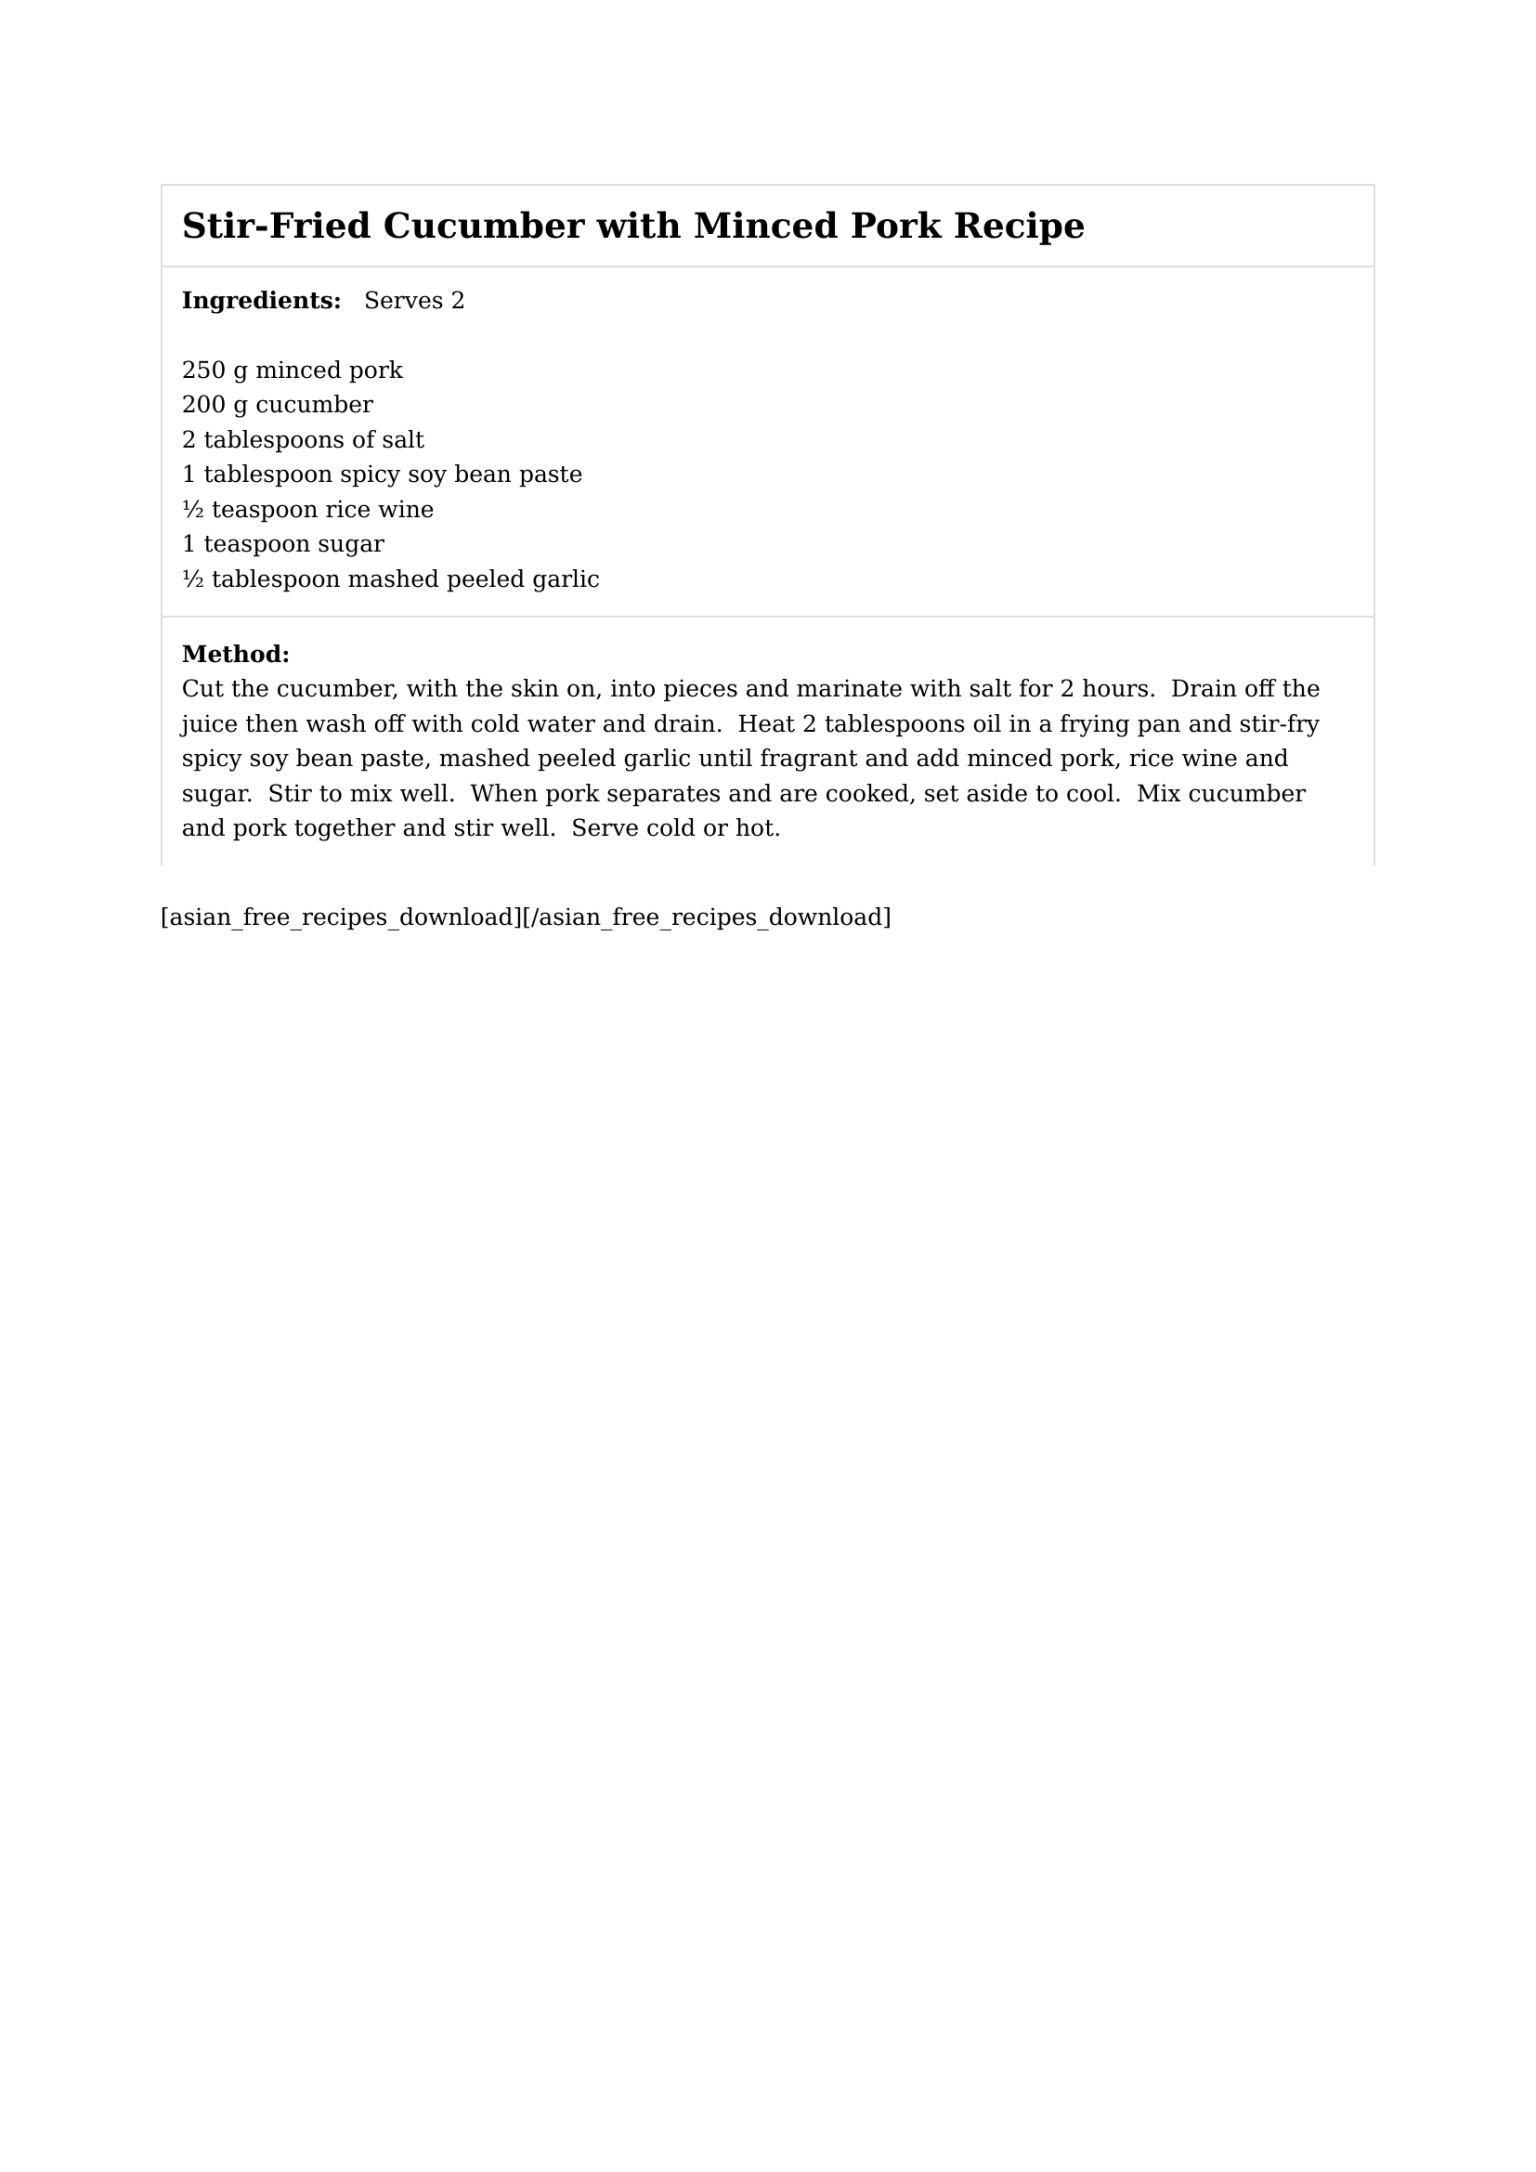 Stir-Fried Cucumber with Minced Pork Recipe